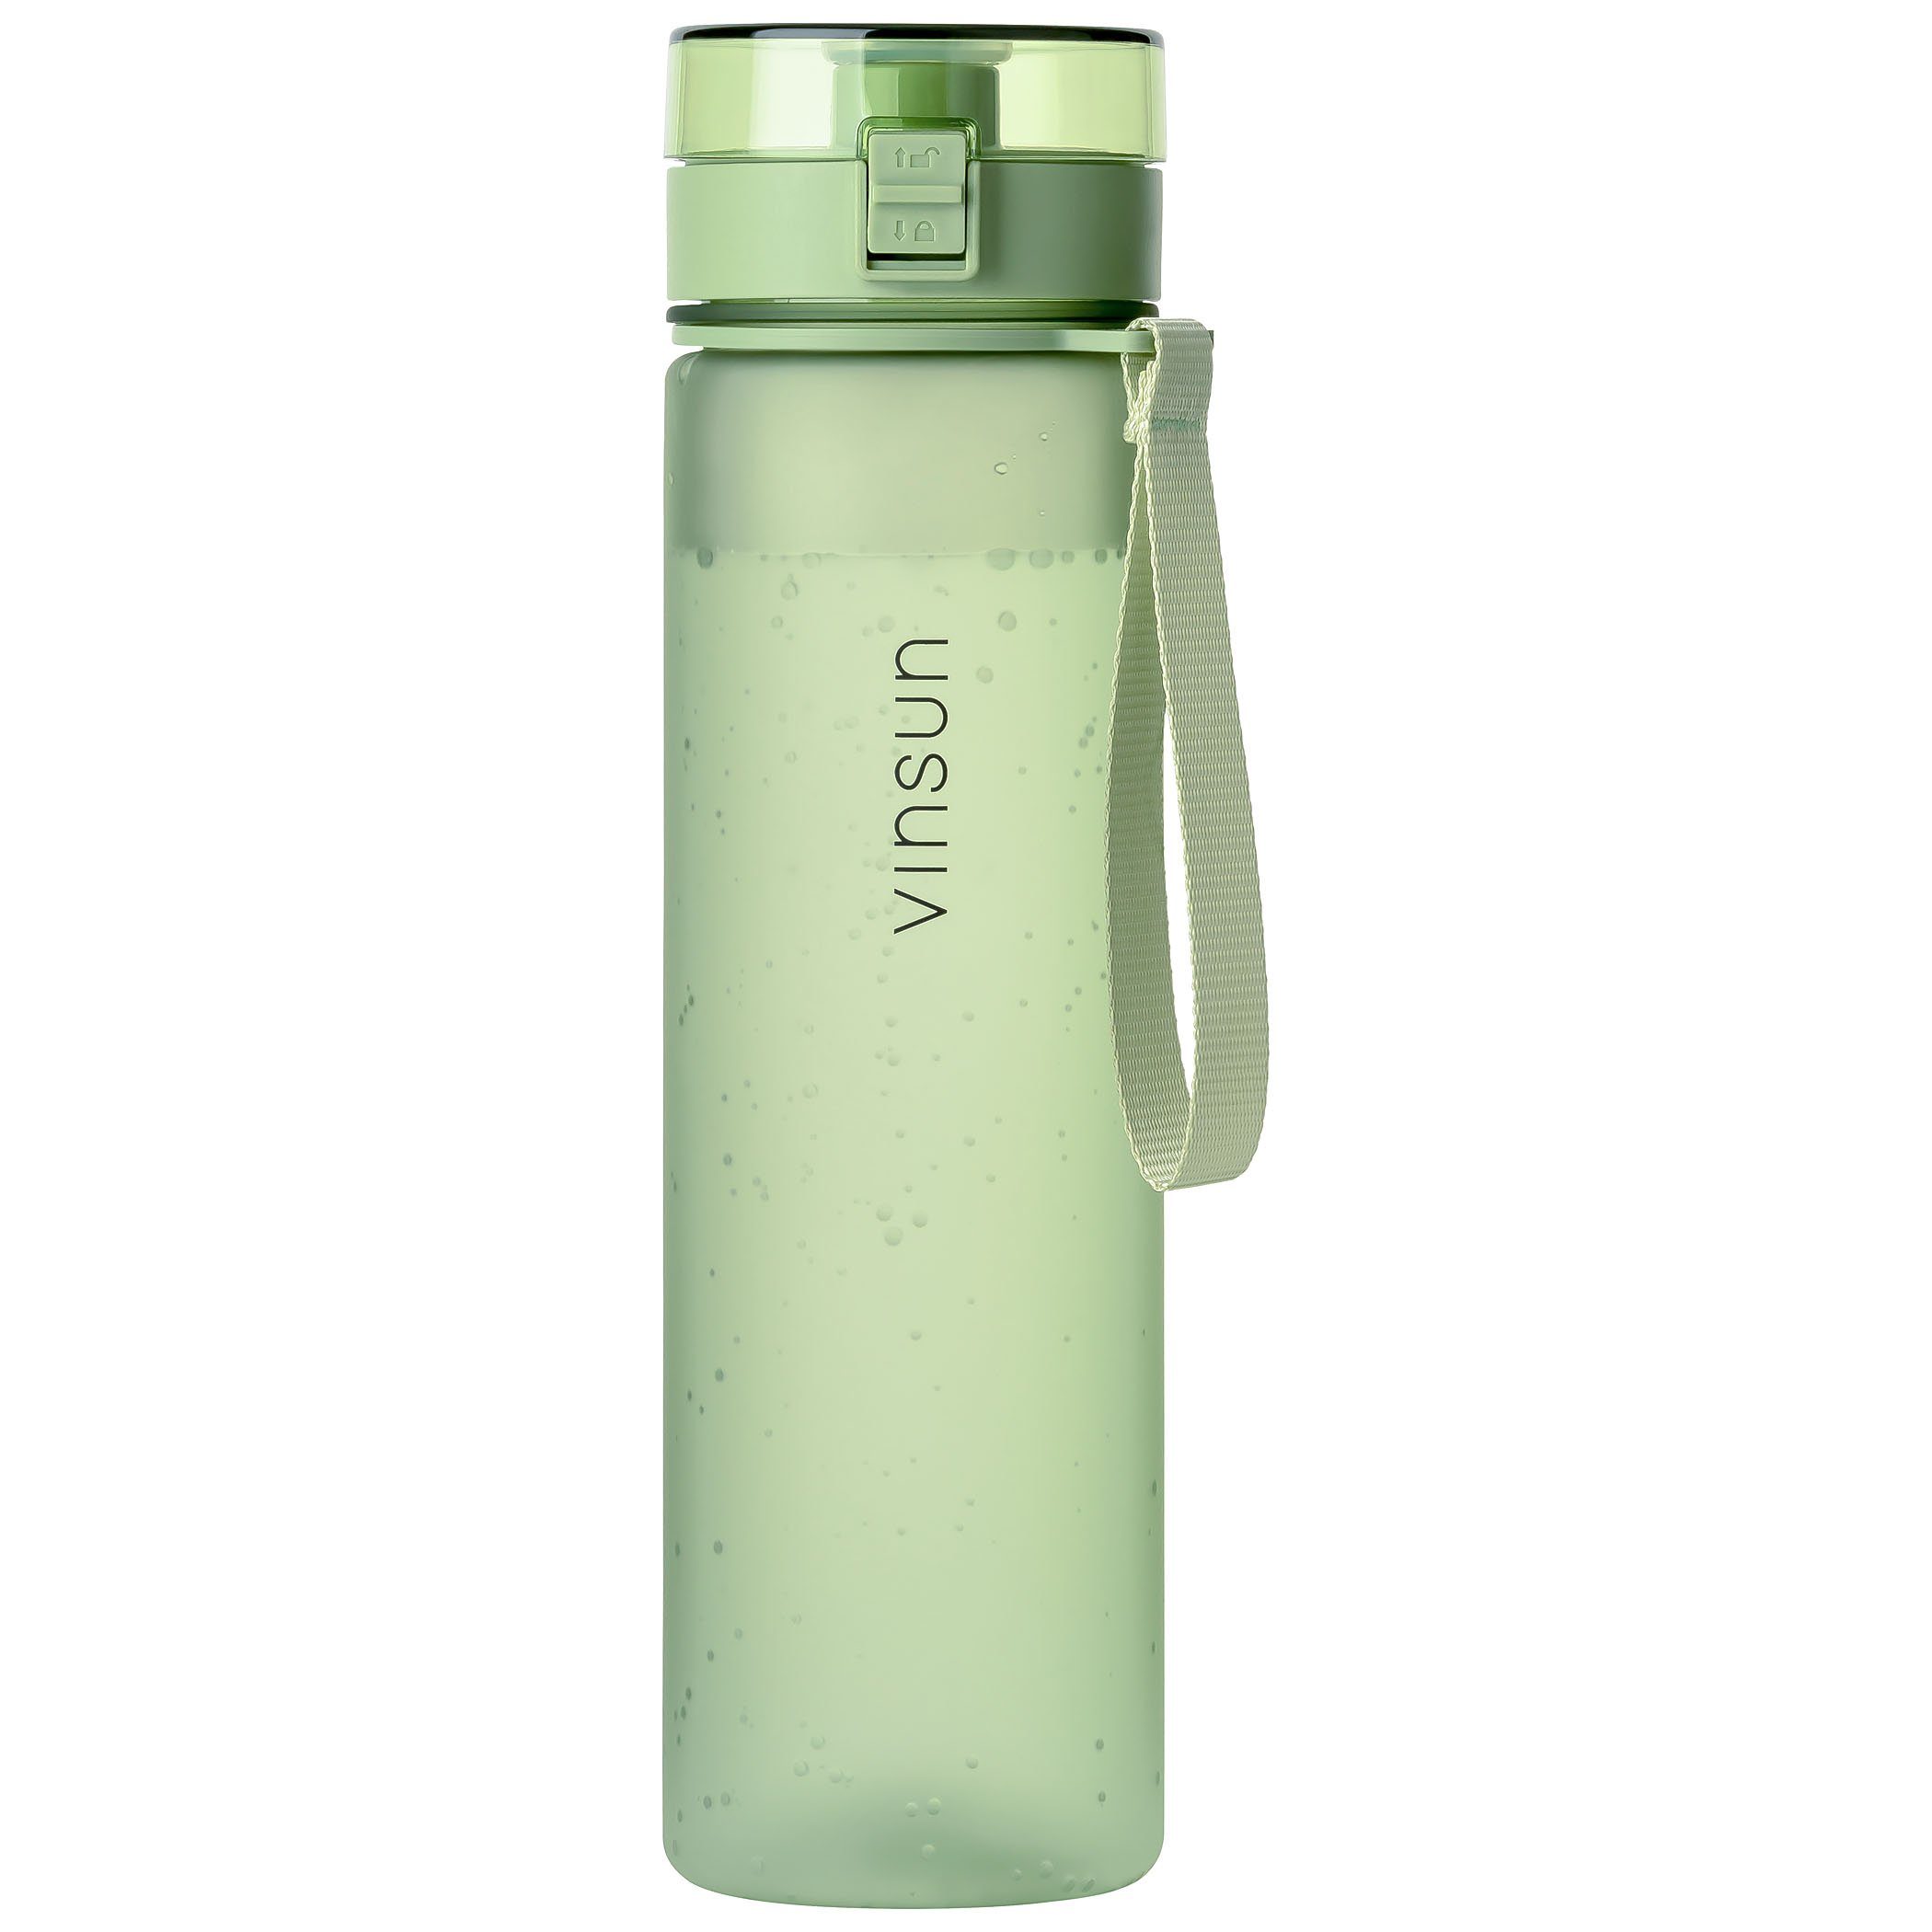 Vinsun Trinkflasche Trinkflasche 1L, Kohlensäure geeignet, auslaufsicher - Hell Grün, BPA frei, Geruchs- und Geschmacksneutral, Kohlensäure, auslaufsicher